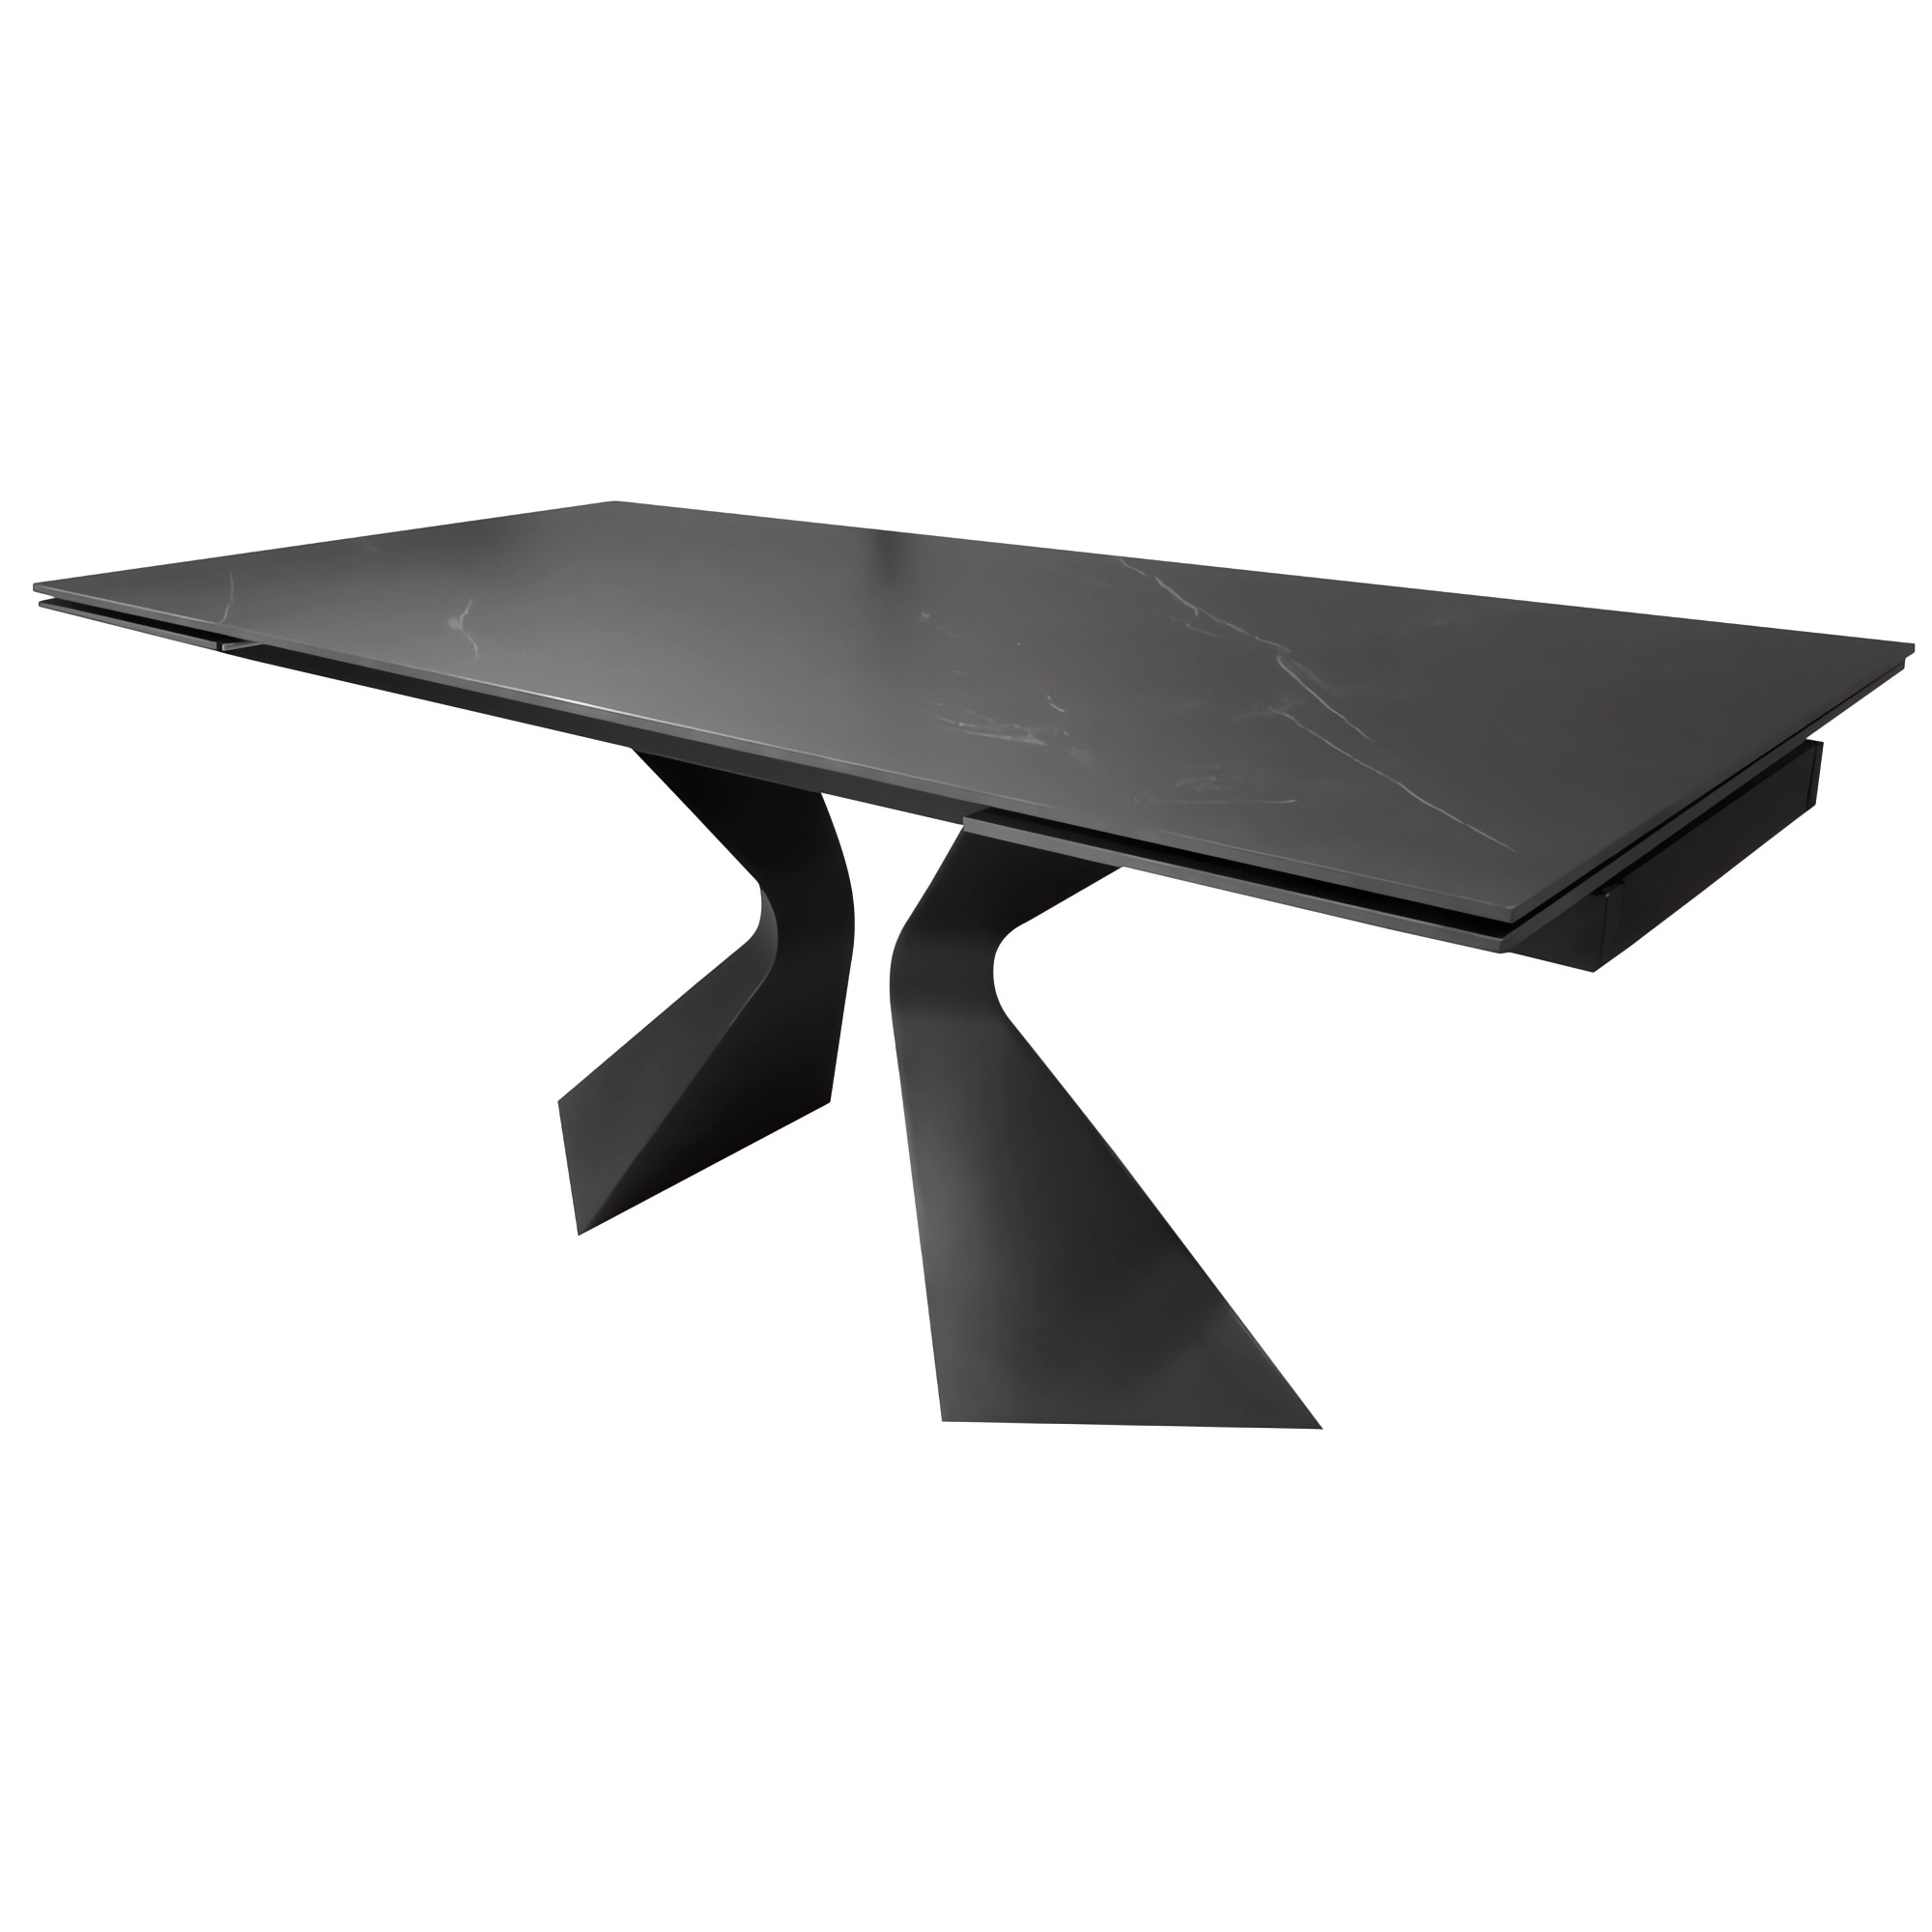 Duna Black Marble стол раскладной керамика 180-260 см Concepto